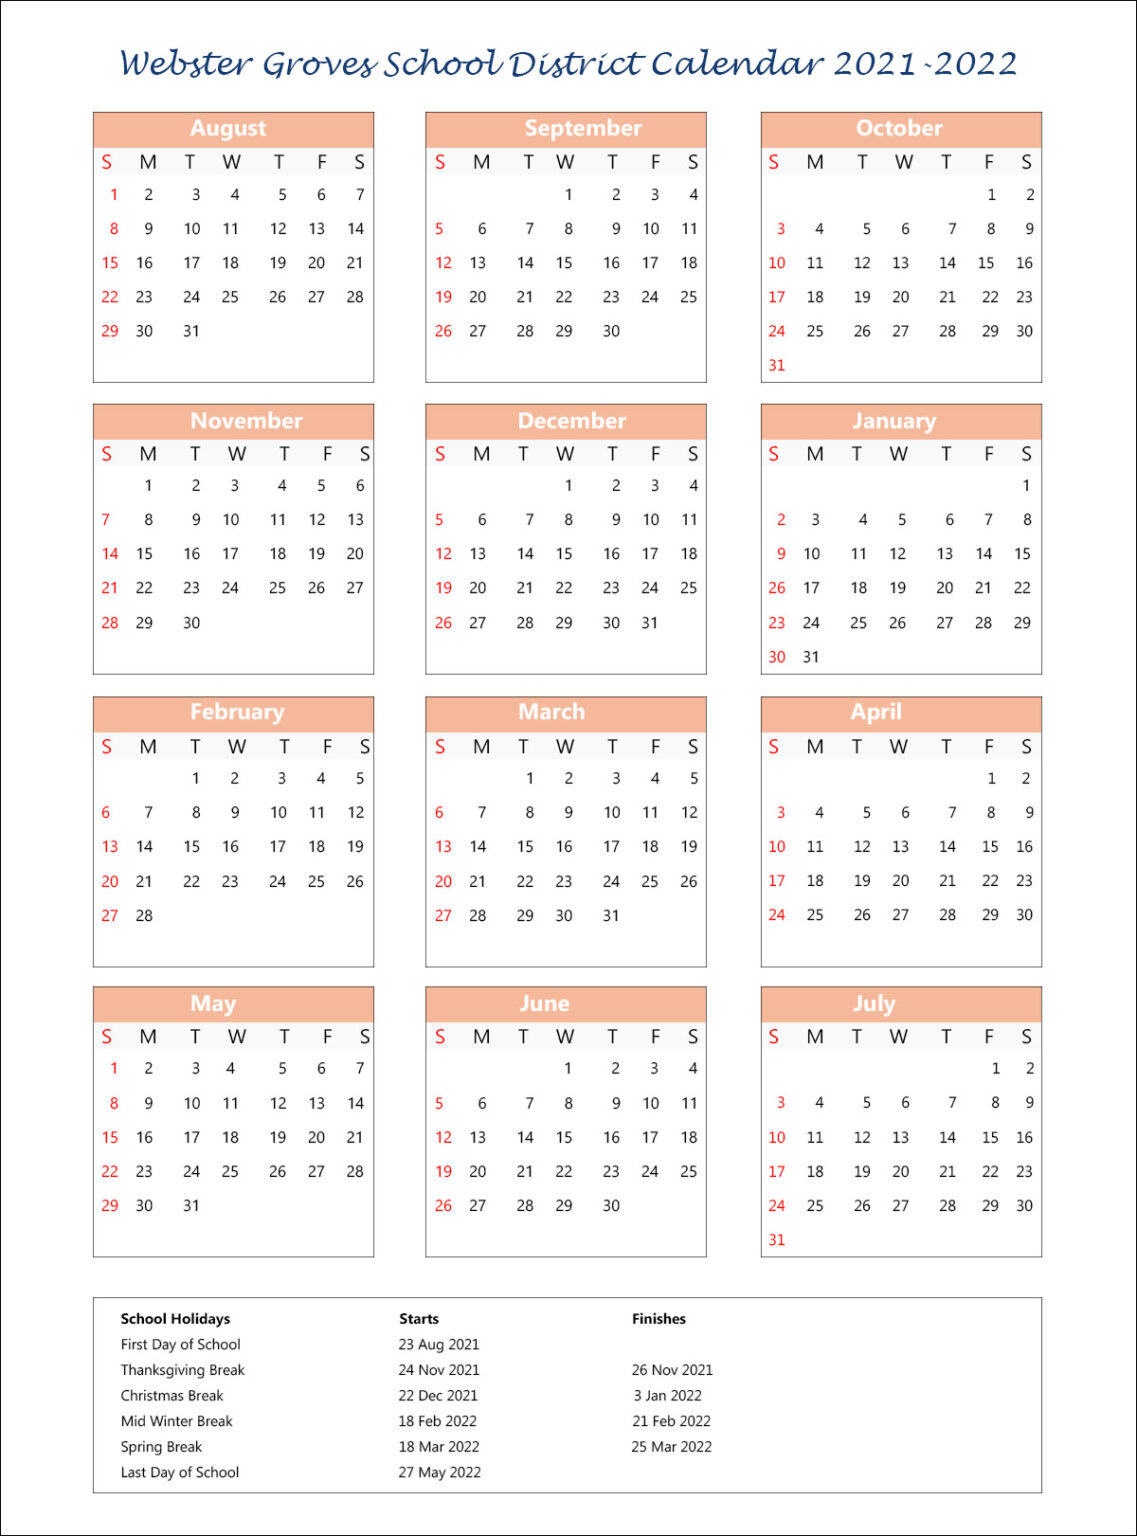 Webster Groves School District Calendar Holidays 2021-2022